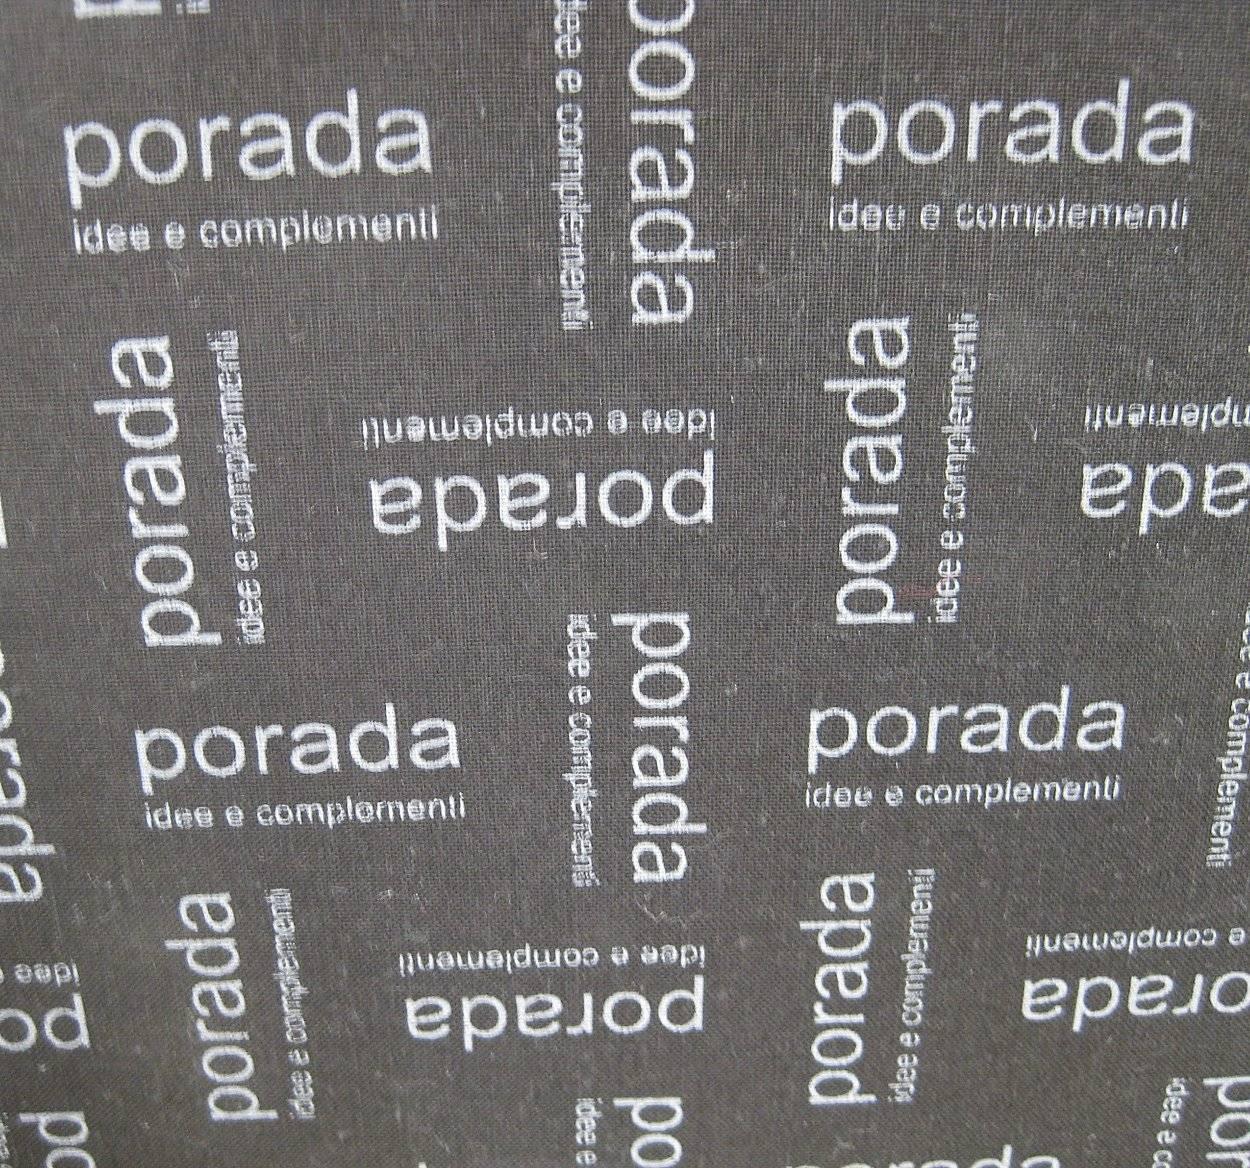 'Pigra' Chaise Longue by Marconato & Zappa for Porada 1